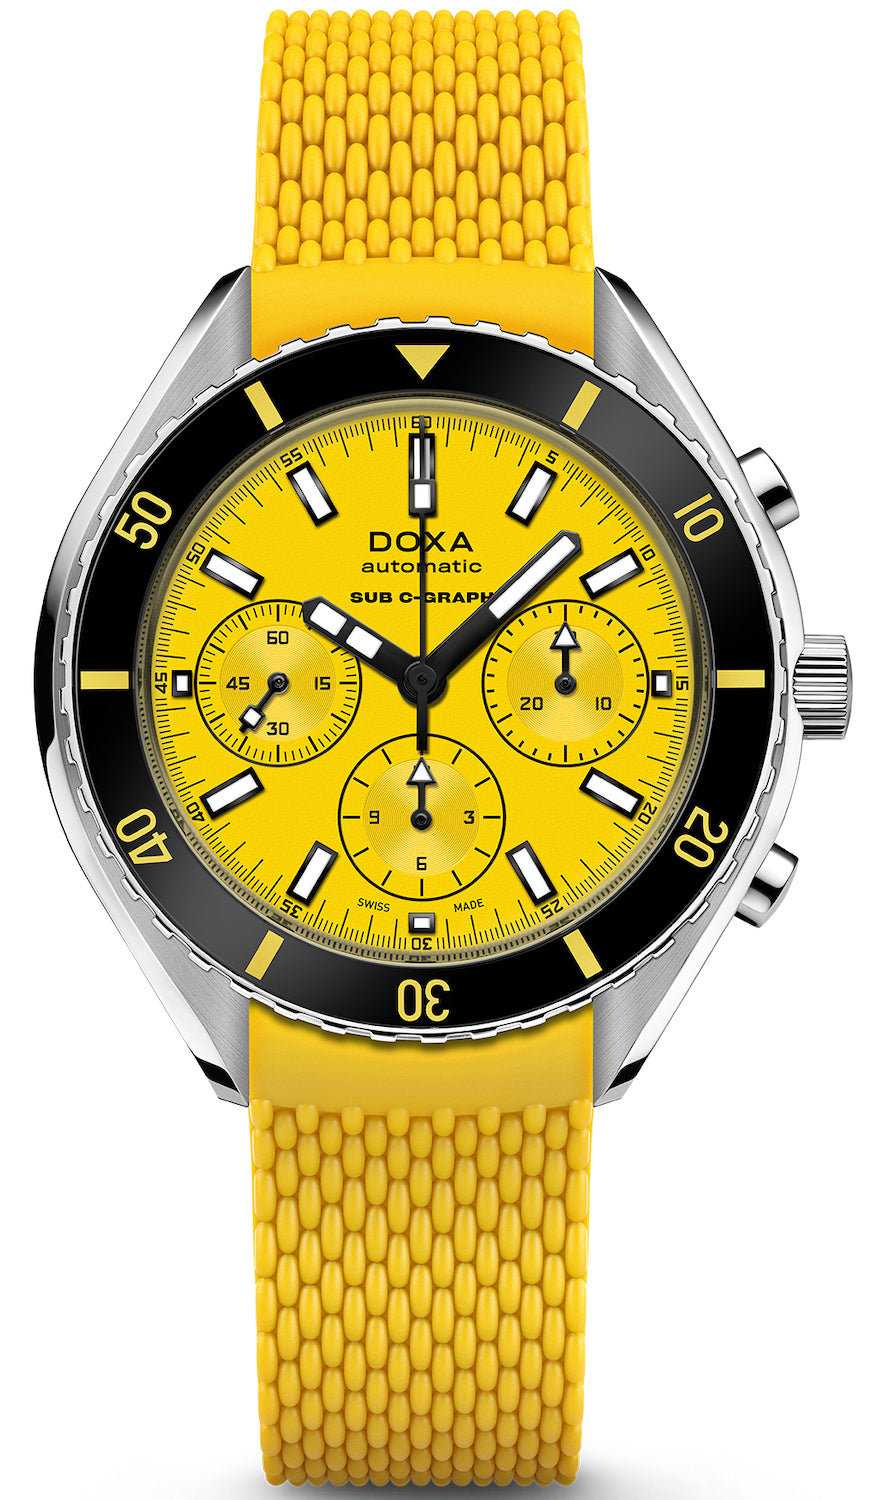 Photos - Wrist Watch DOXA Watch SUB 200 C-Graph Divingstar Rubber - Yellow DOX-109 